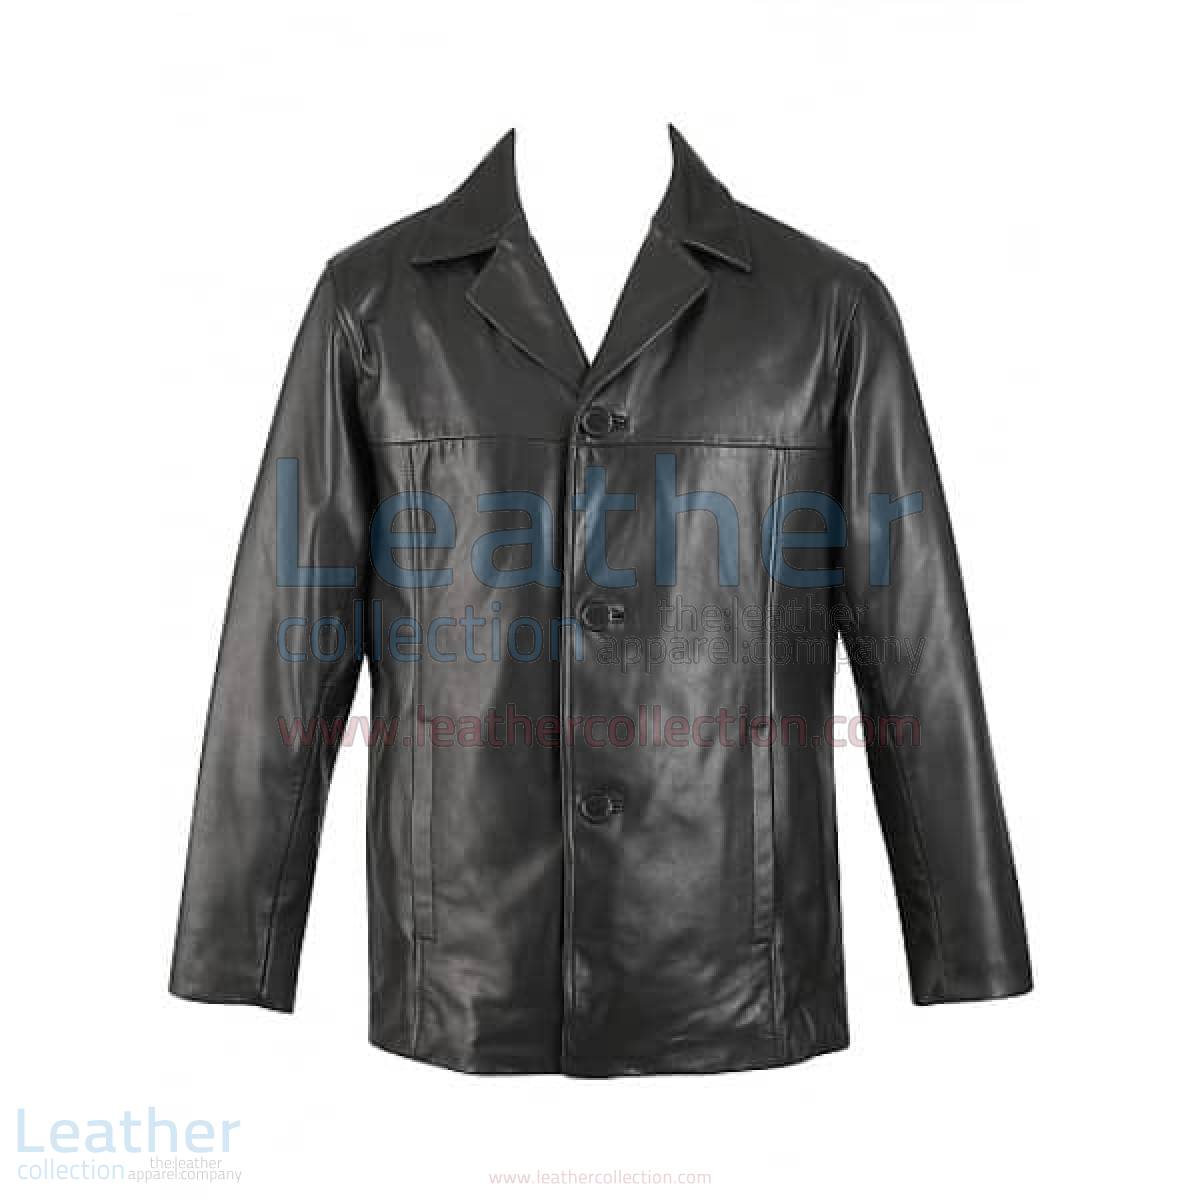 mens leather blazer